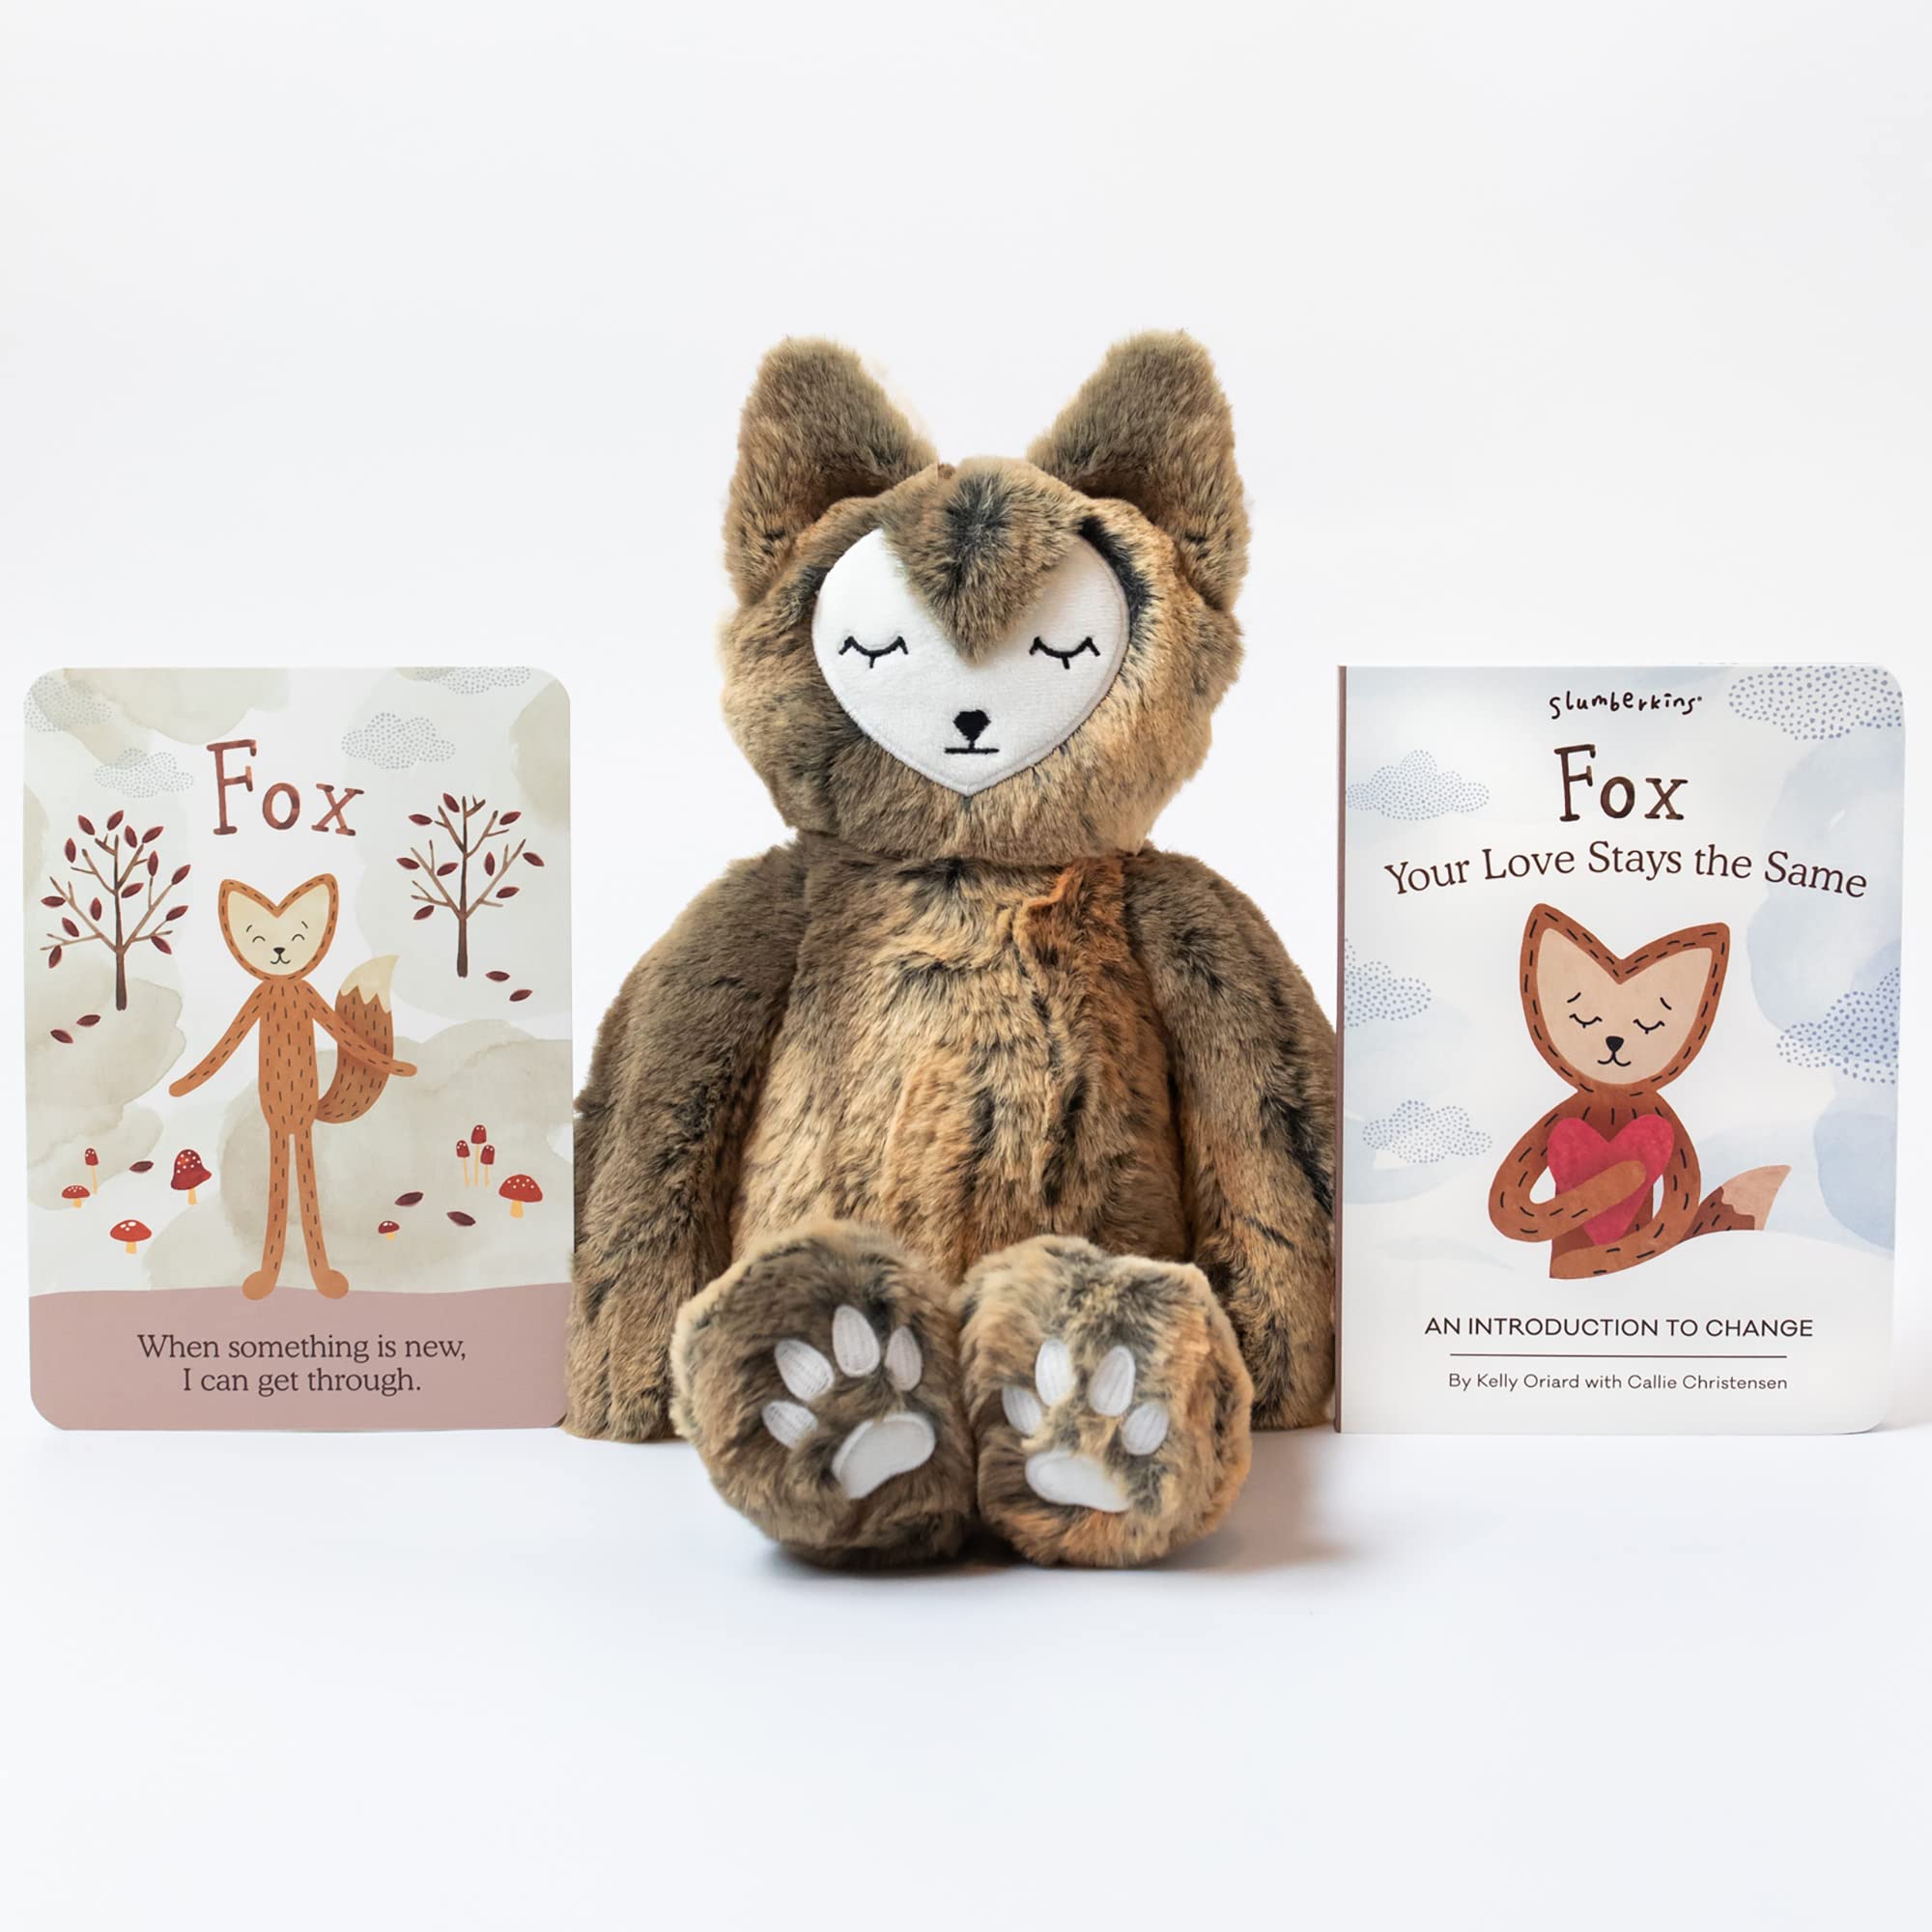 Fox stuffed animal and book set - change